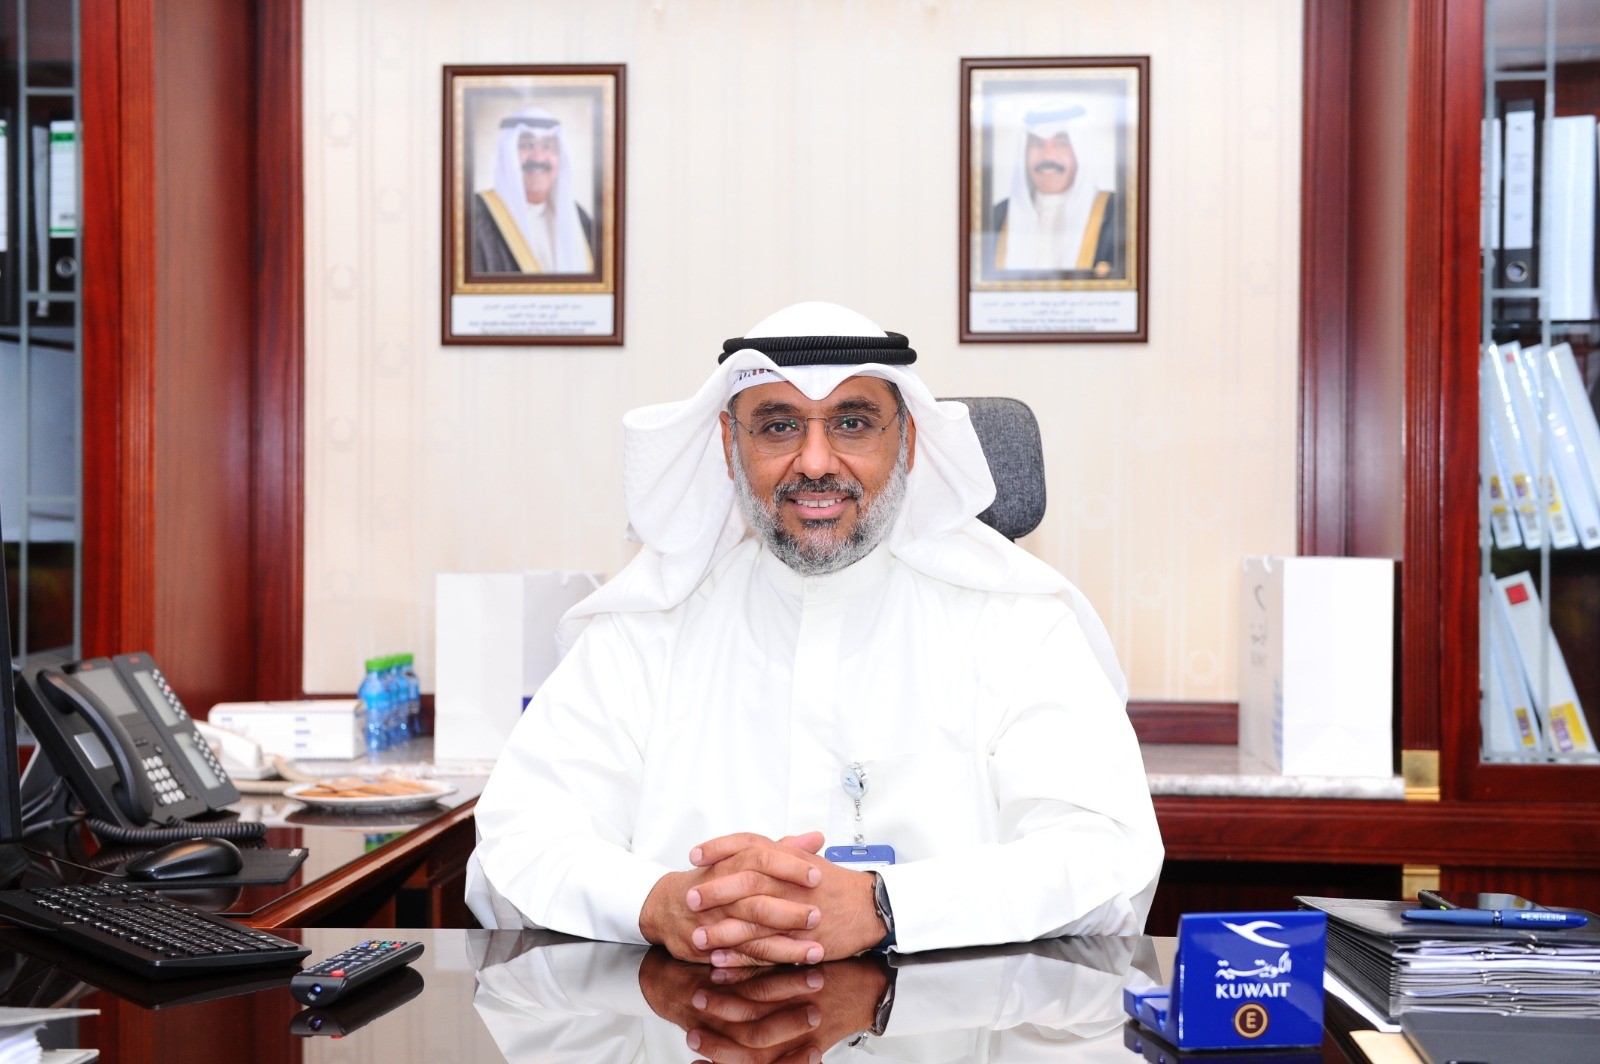 Acting CEO of Kuwait Airway Essa Al-Haddad